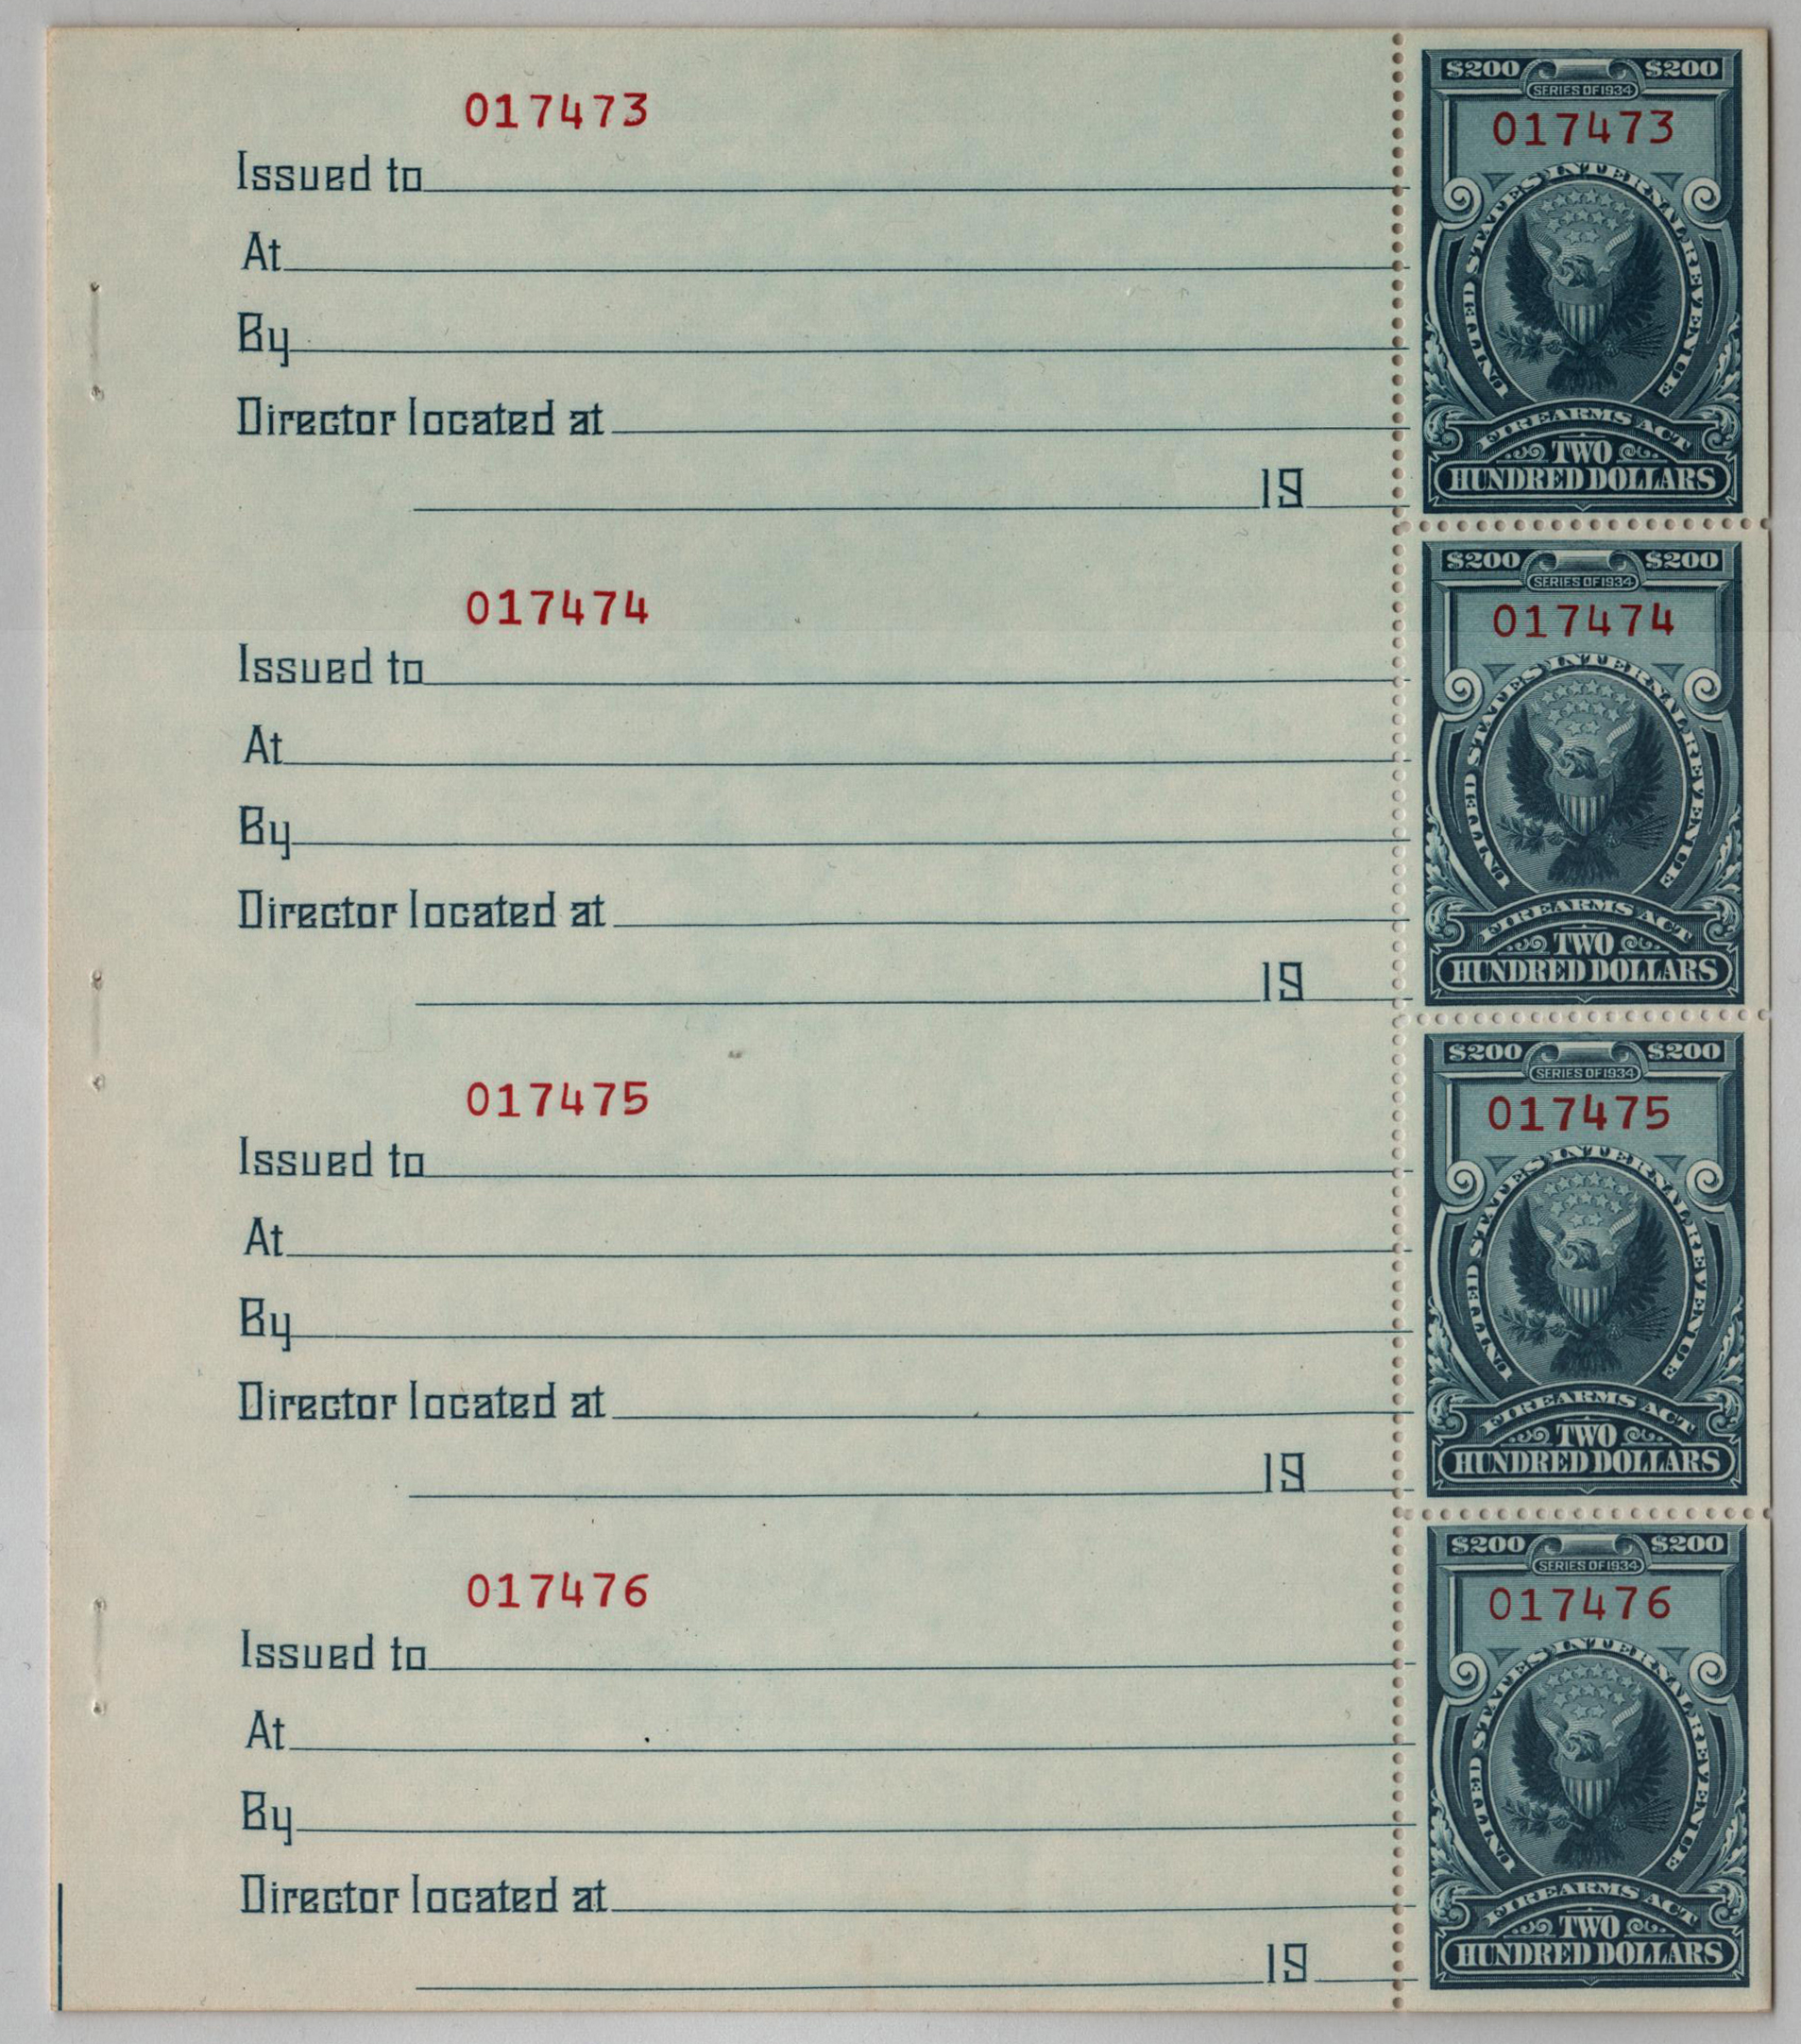 1974 $200 dull blue & red bklt pane 10